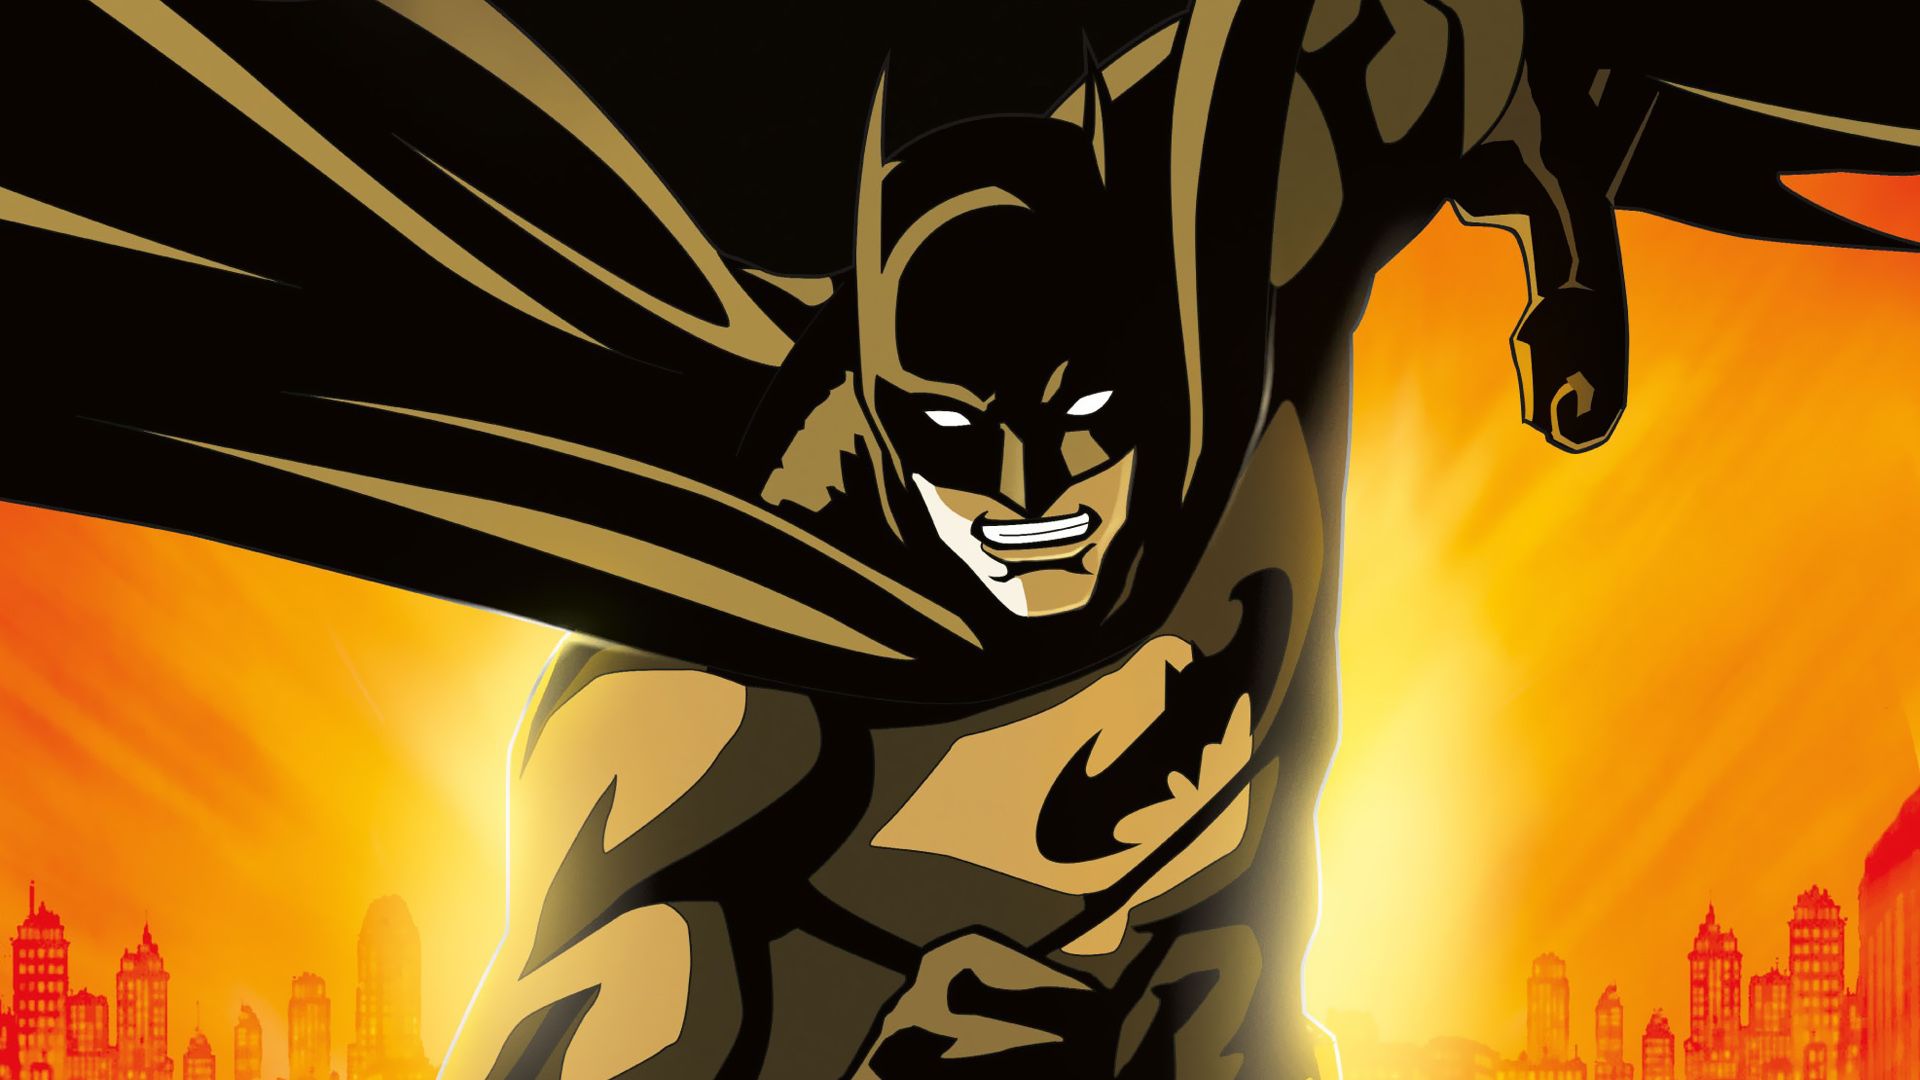 Batman: Gotham Knight background